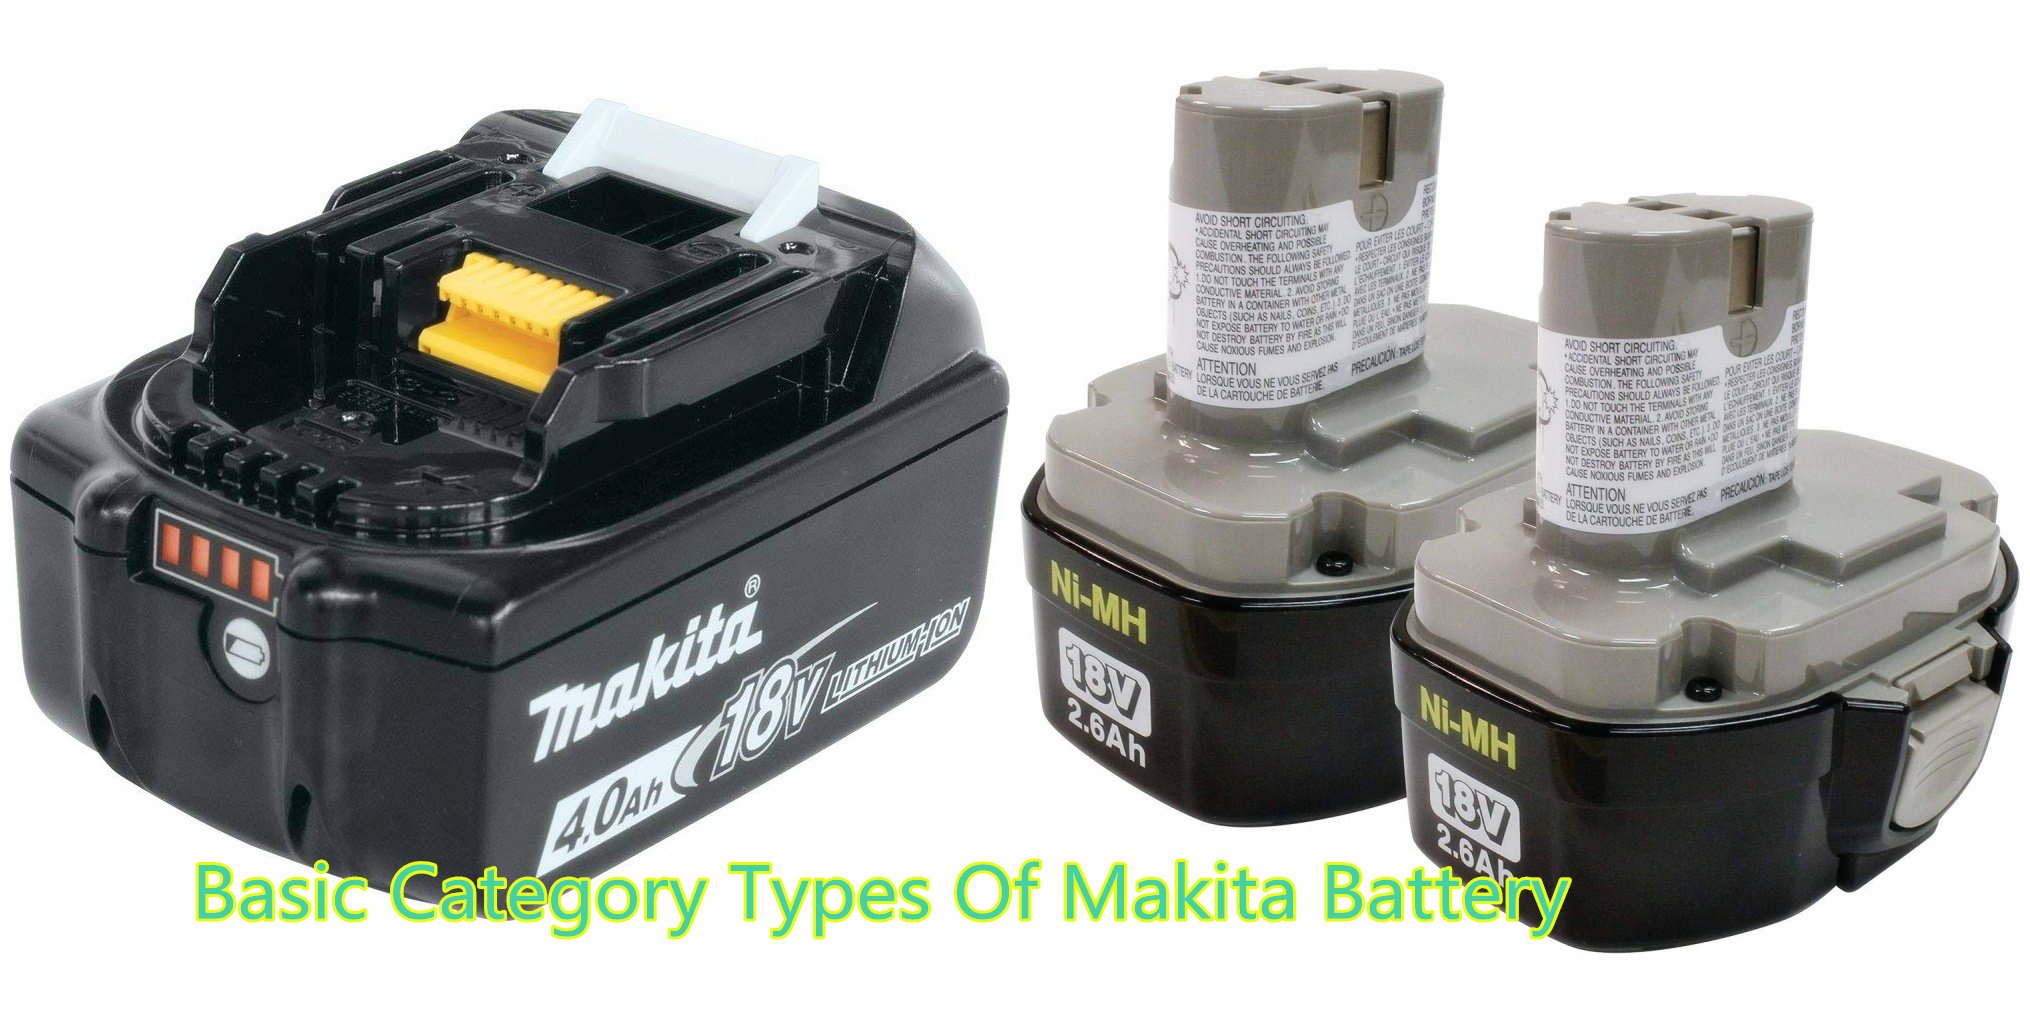 Basic Category Types Of Makita Battery